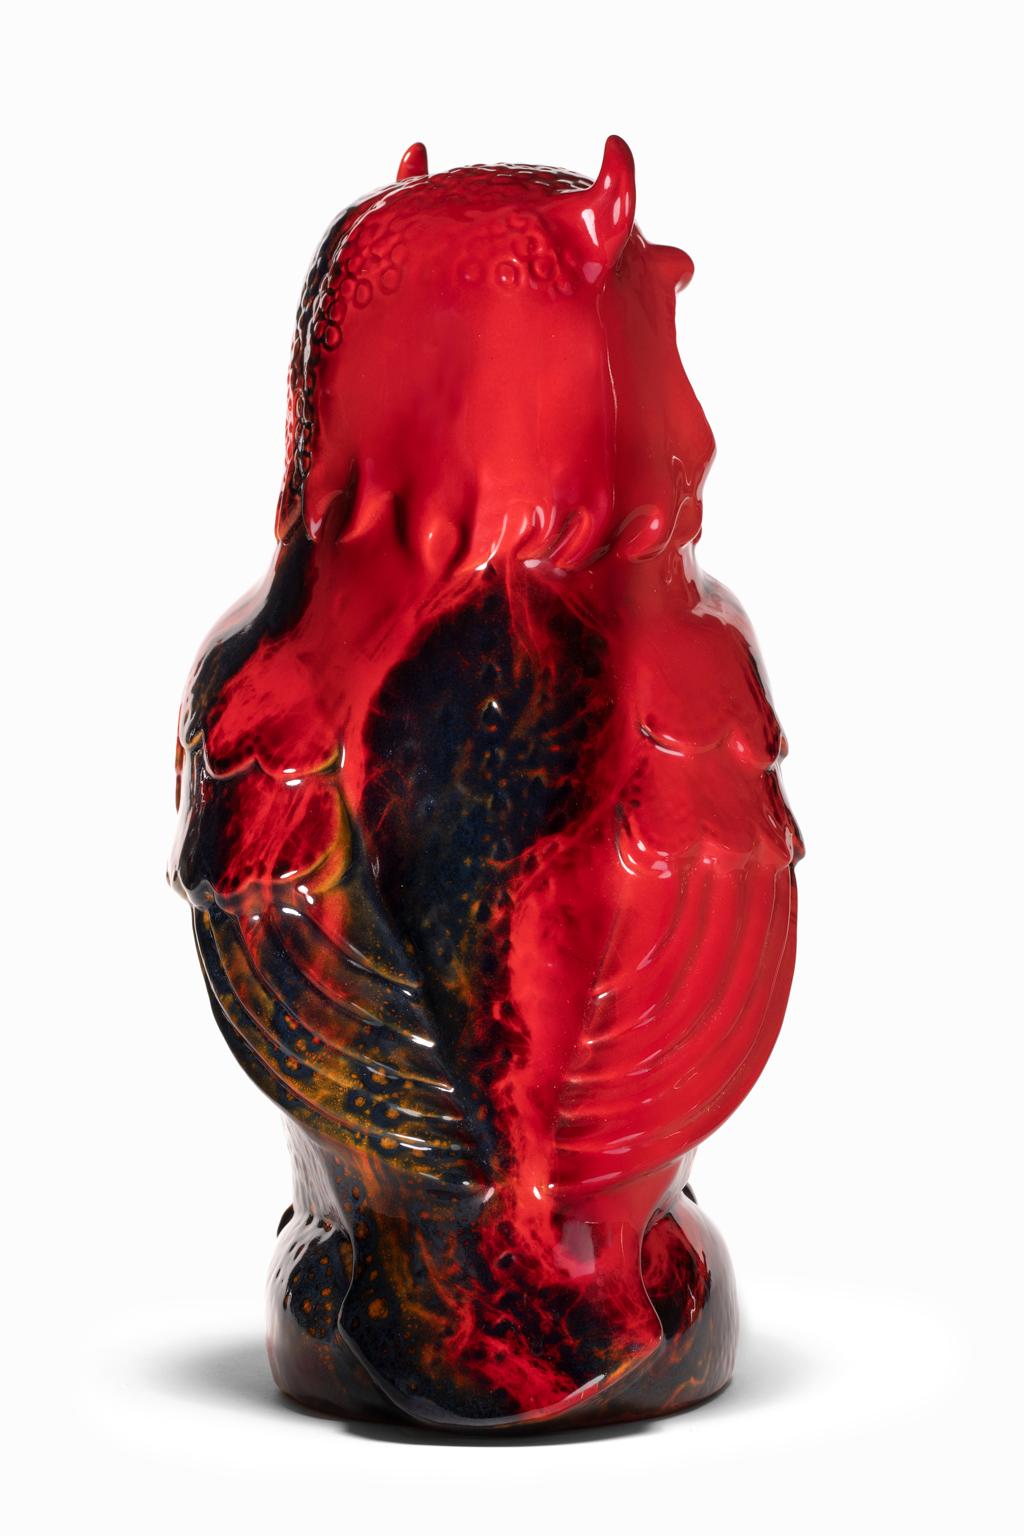 English Royal Doulton Red Flambe Porcelain Figurine 